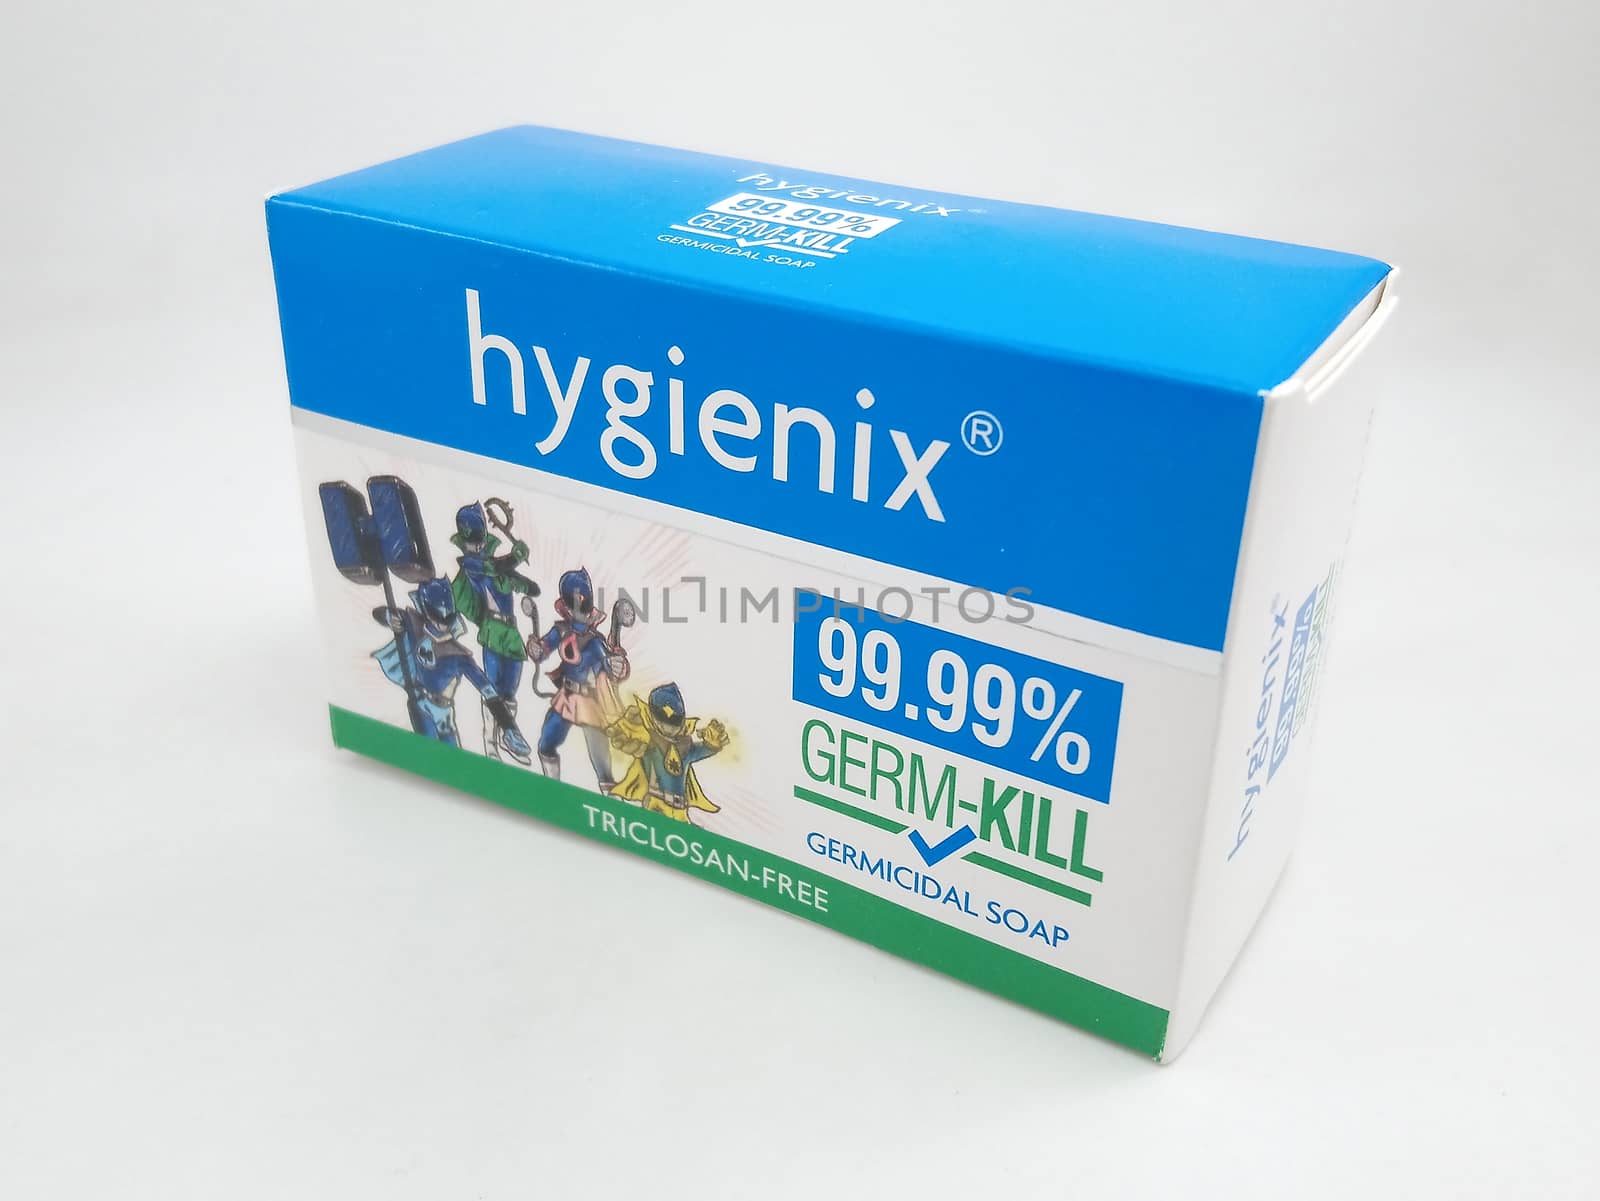 Hygienix germicidal soap in Manila, Philippines by imwaltersy